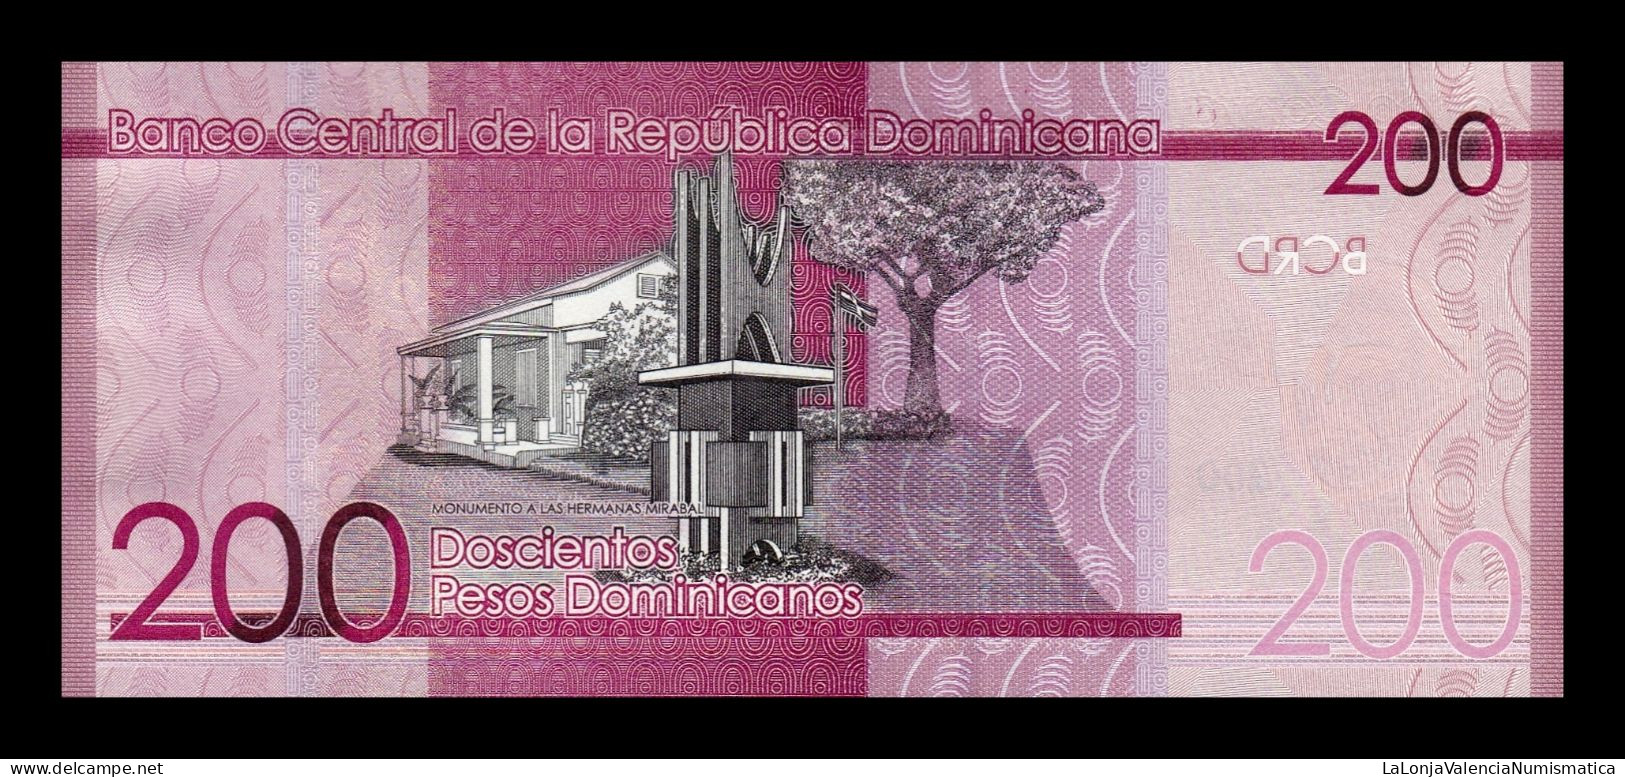 República Dominicana 200 Pesos Dominicanos 2014 Pick 191a Low Serial 876 Sc Unc - Dominicana